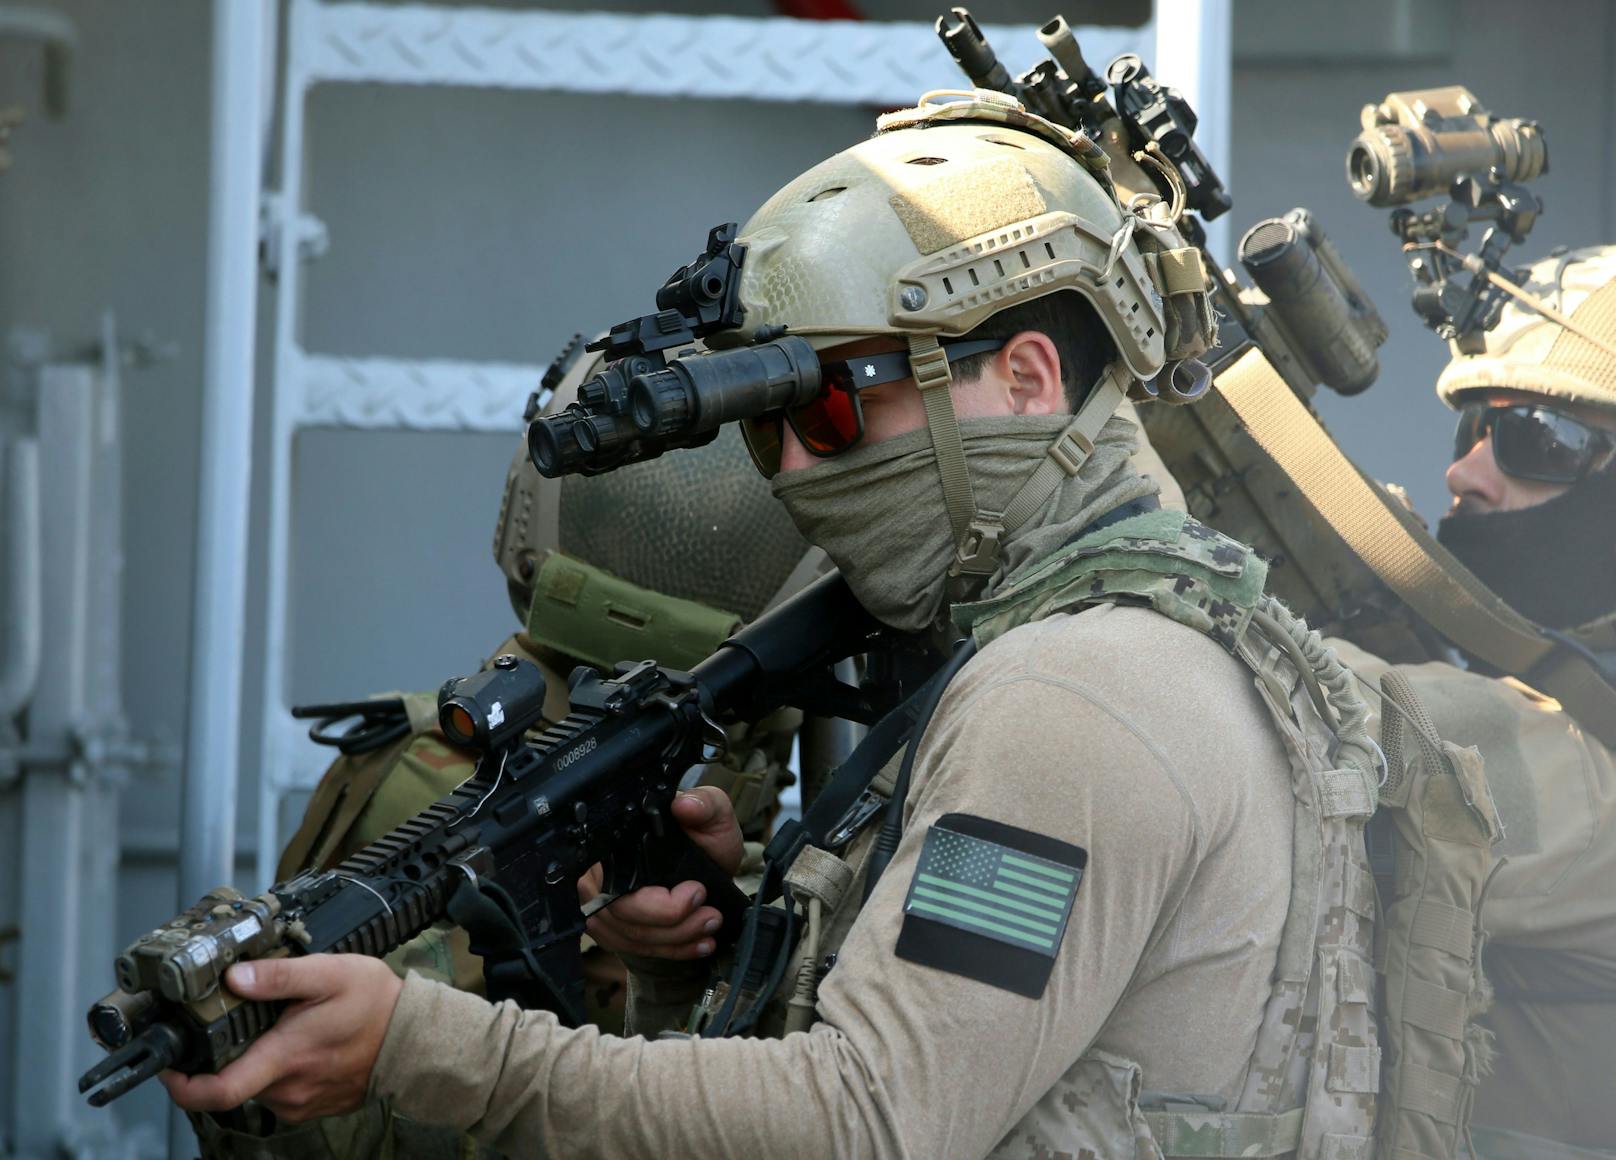 Pentagon glaubt an zeitnahen IS-Anschlag in USA